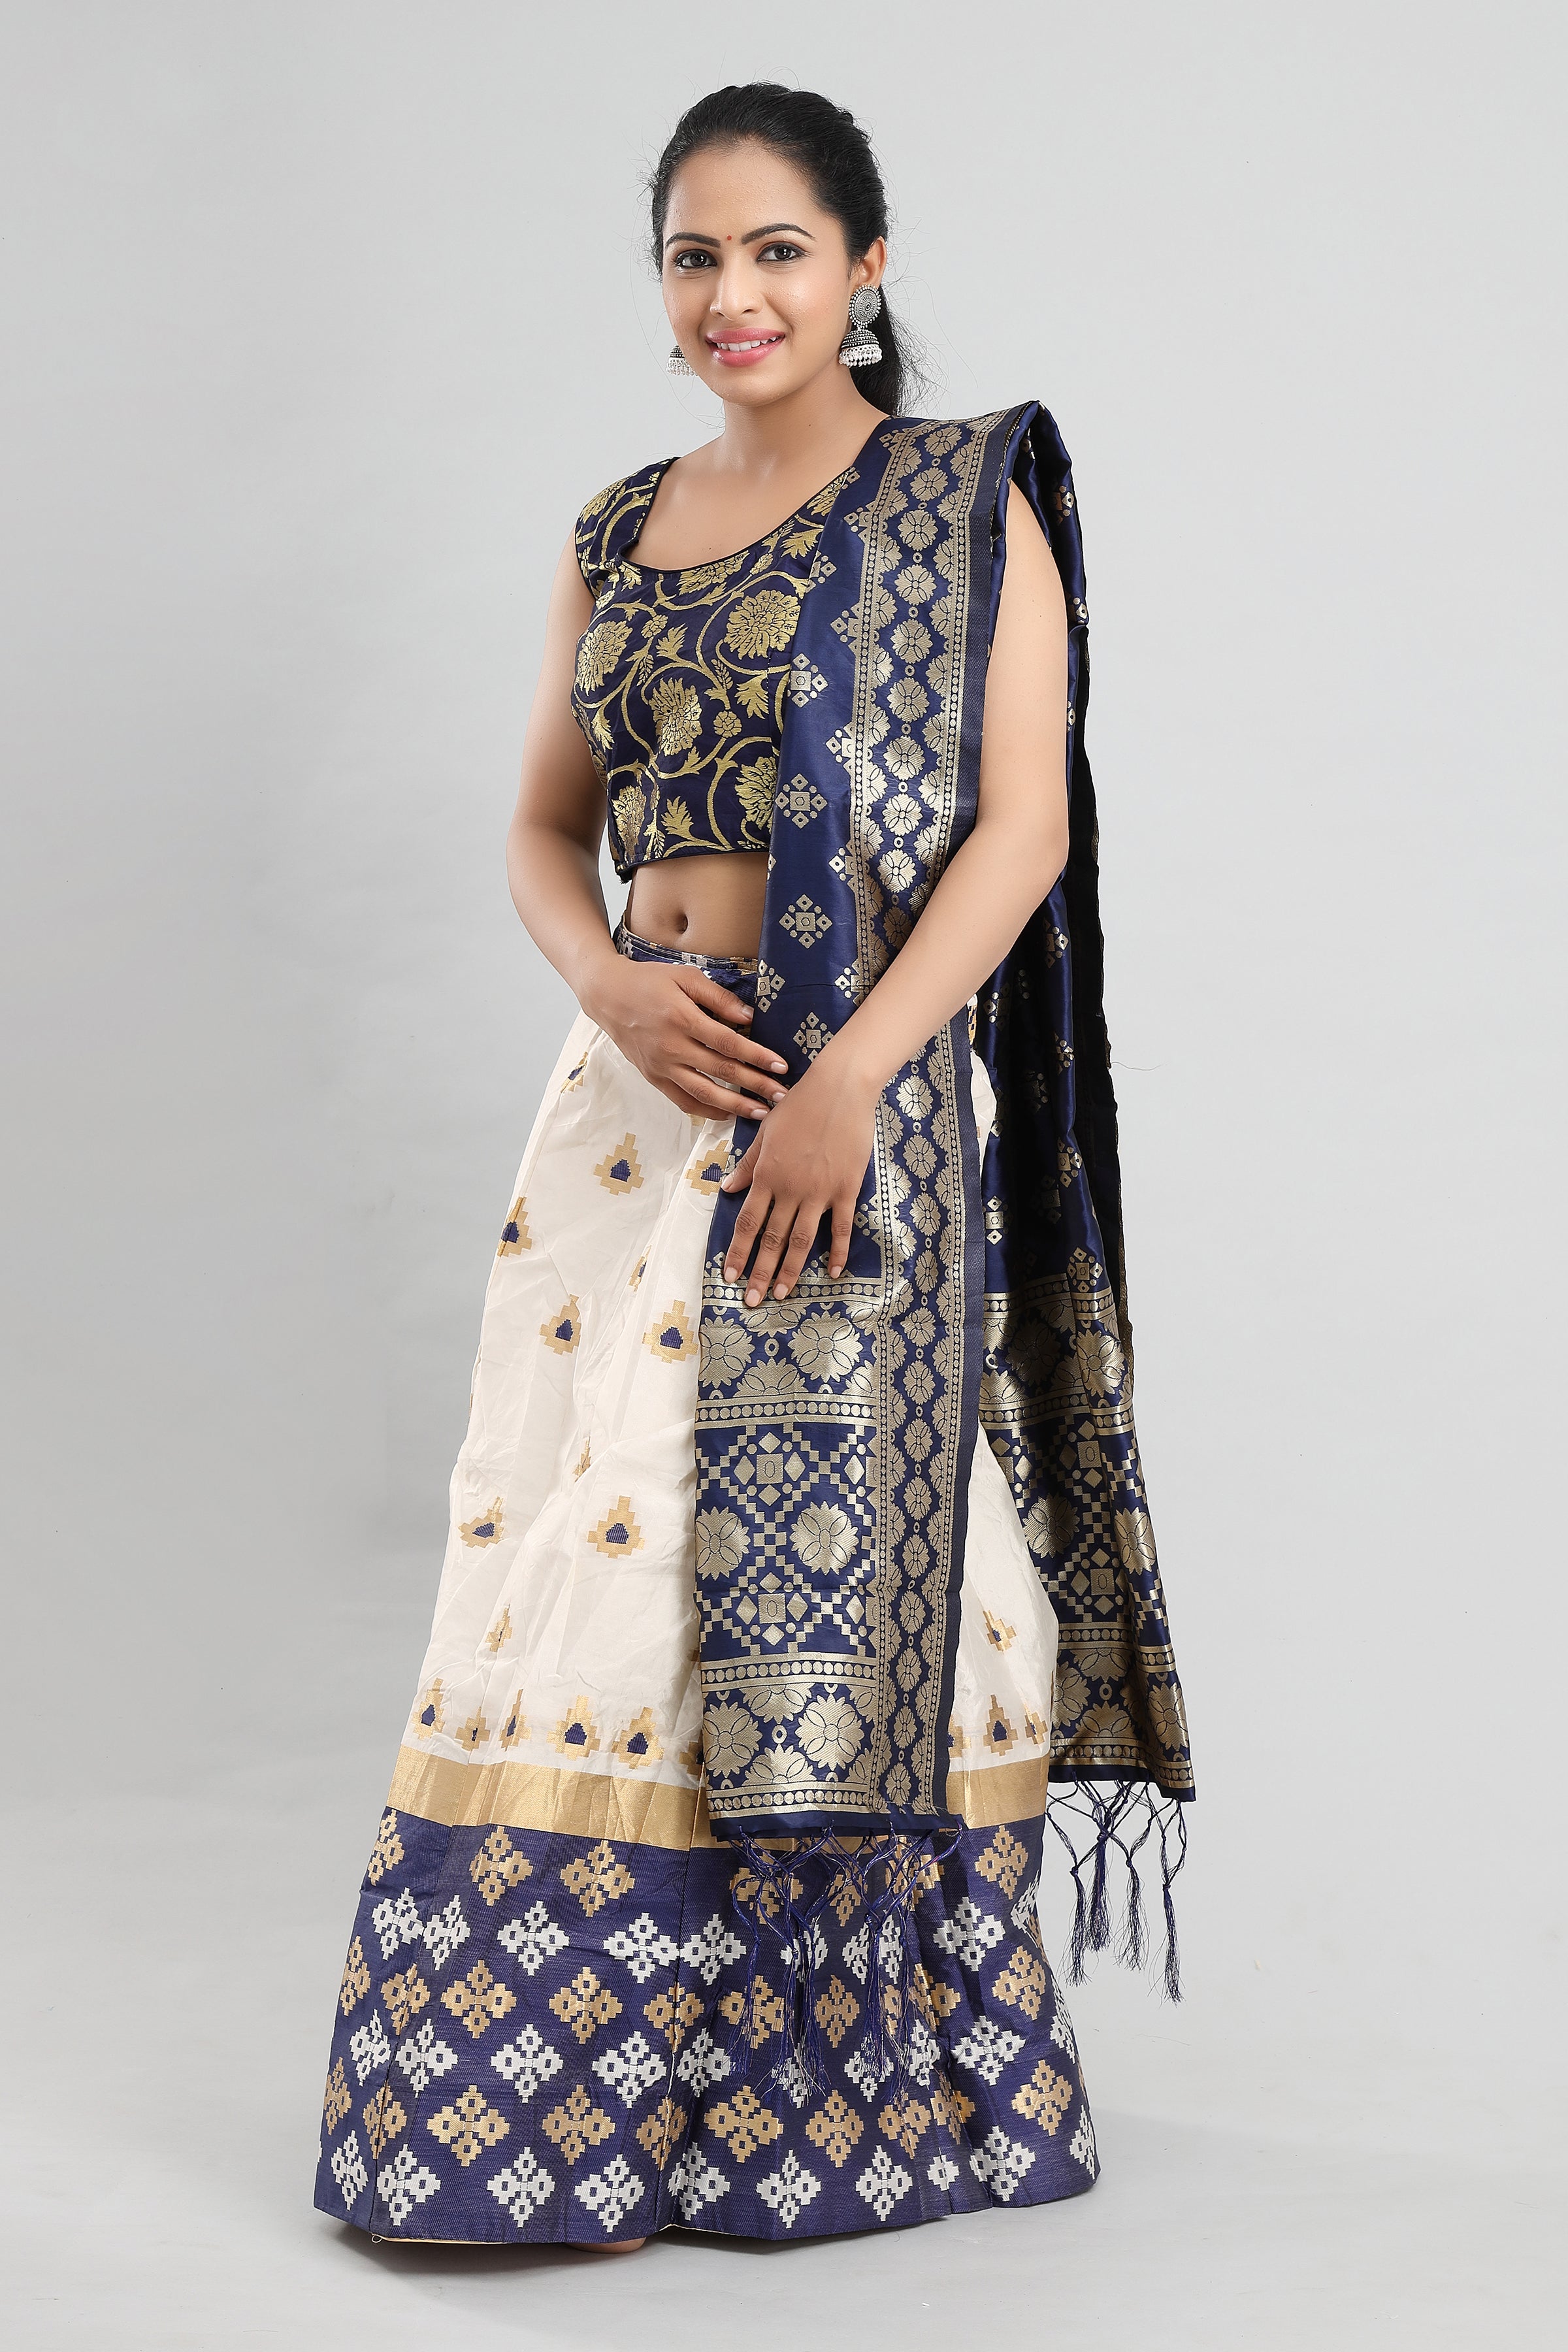 Women's Banarasi Blue On White Brocade Lehenga With Ready Made Blouse, Dupatta, Cane And Lining. - MANOHARA